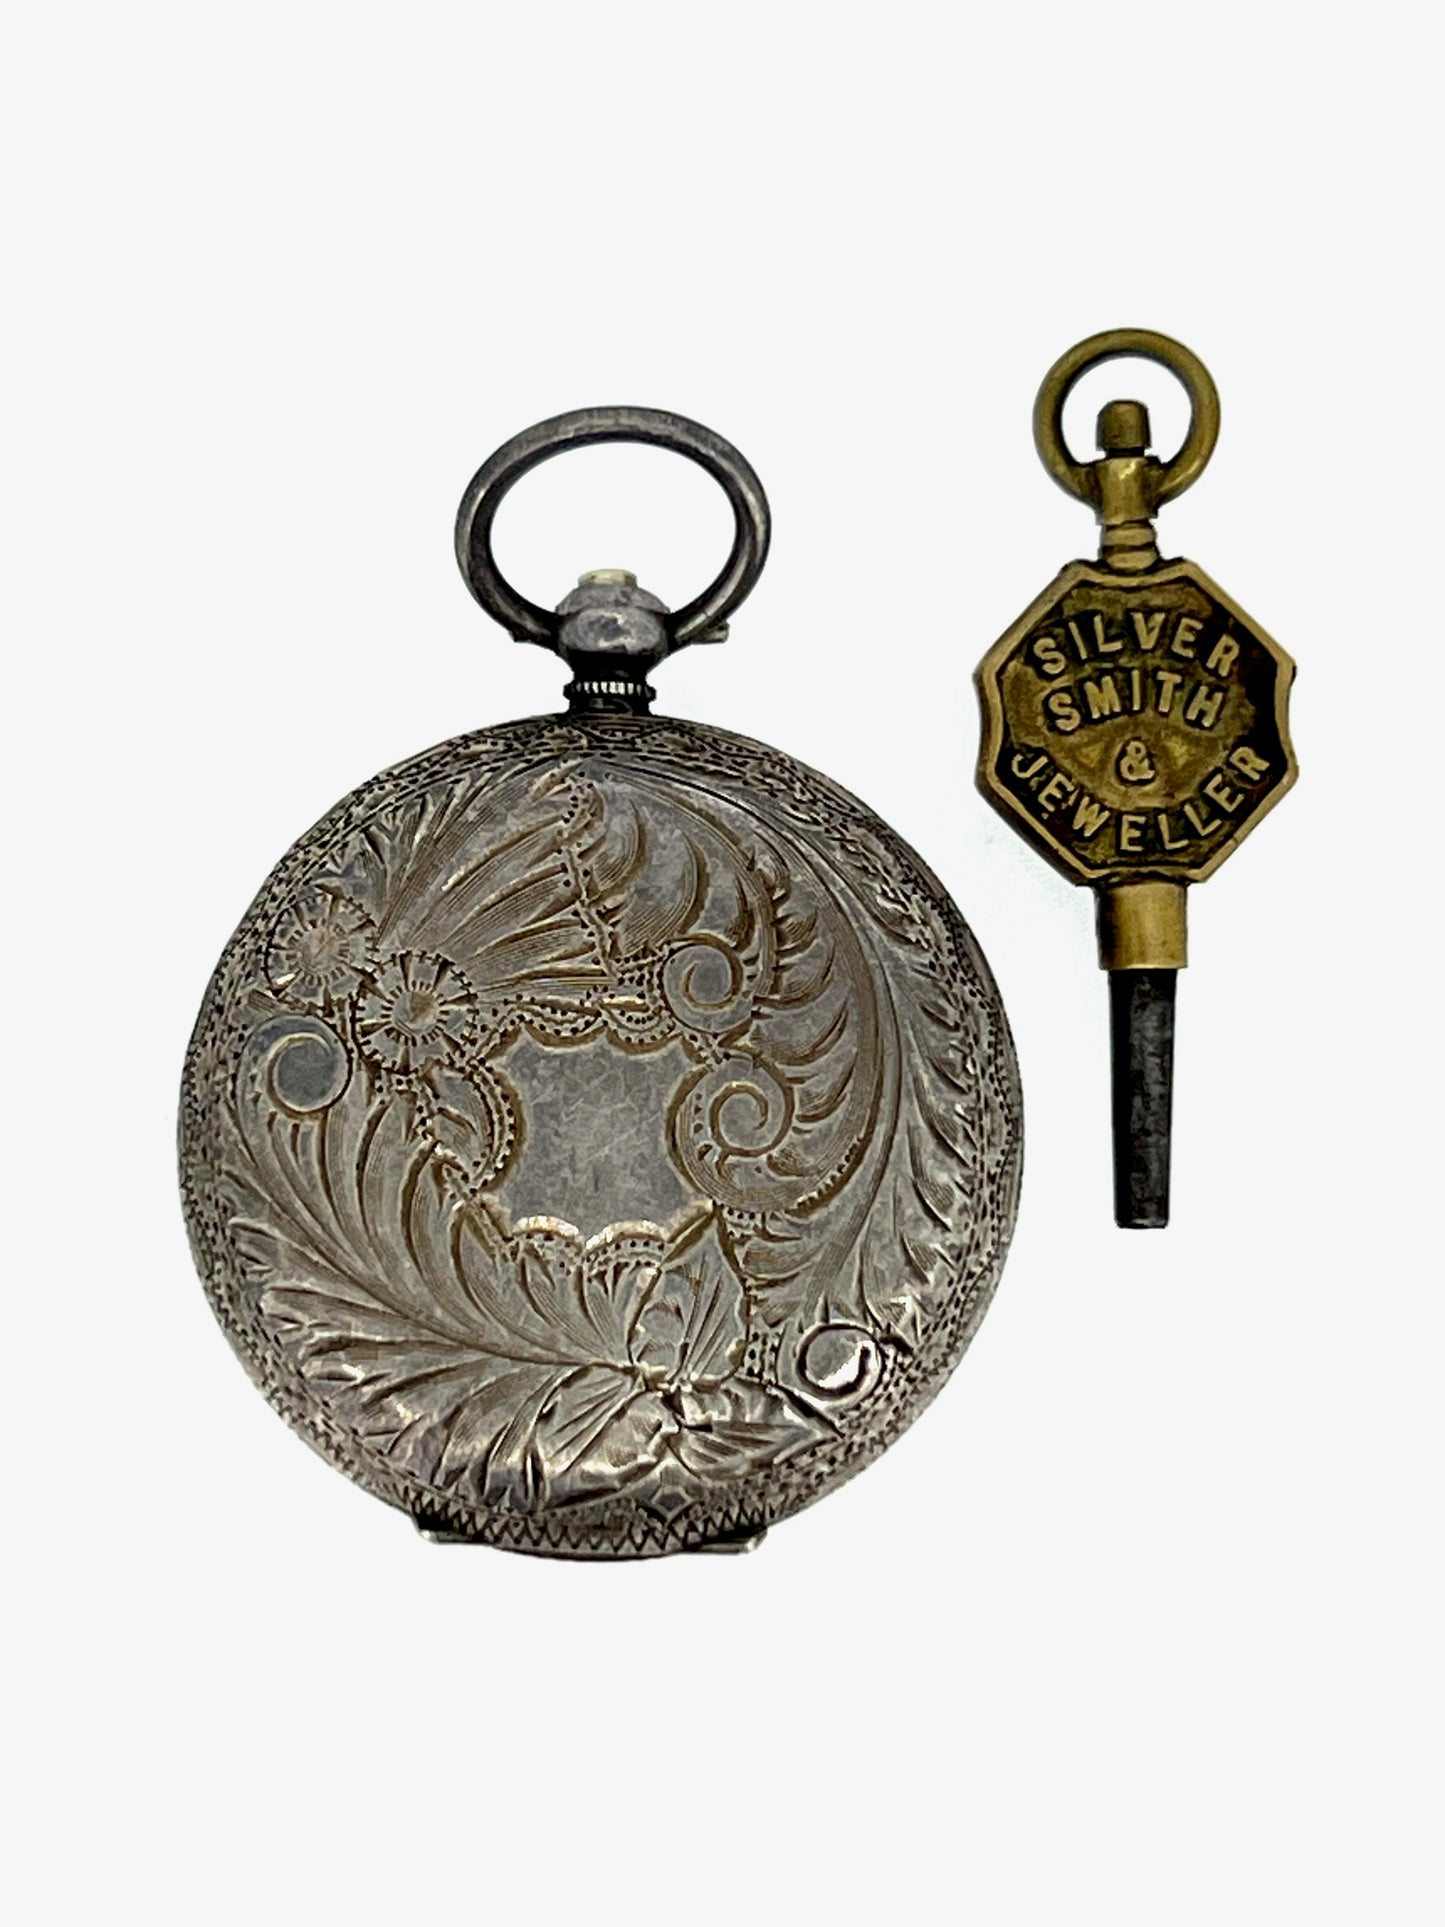 Victorian Pocketwatch with original Arnold Kneebone key